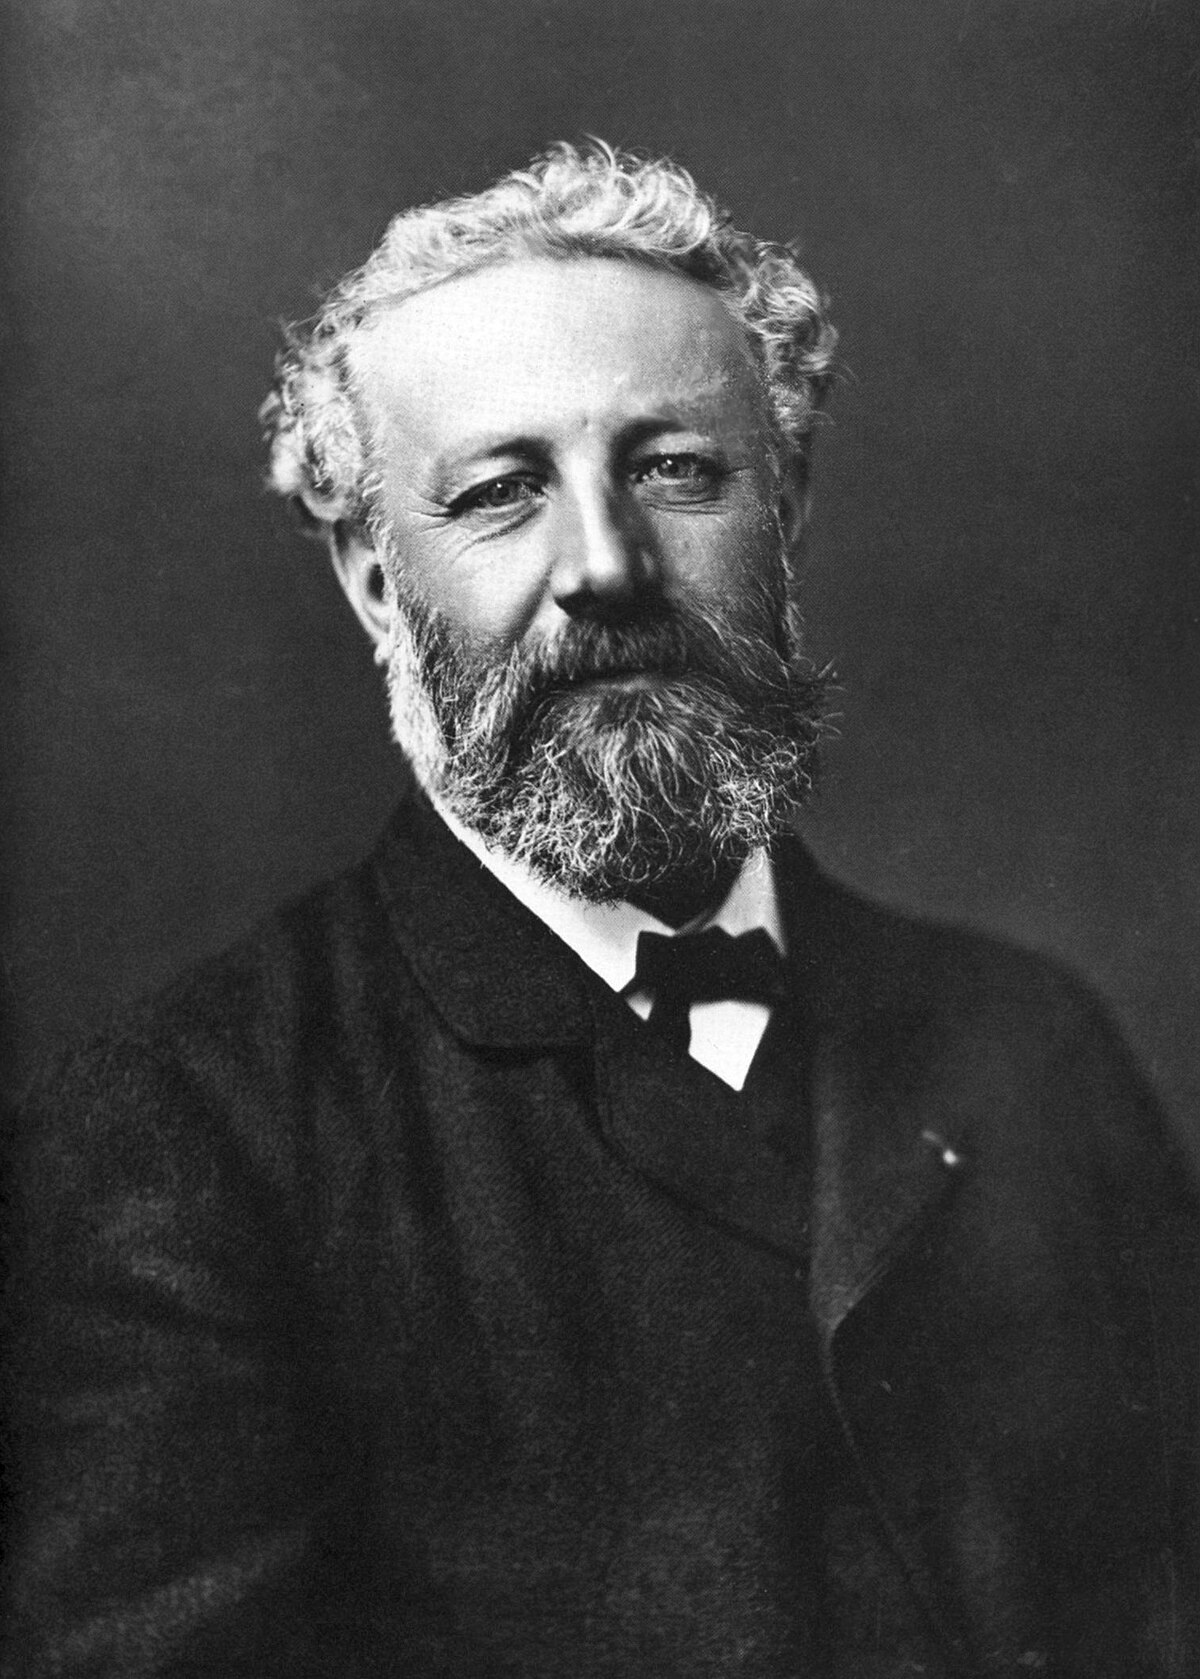  Jules Verne نىڭ تەرجىمىھالى